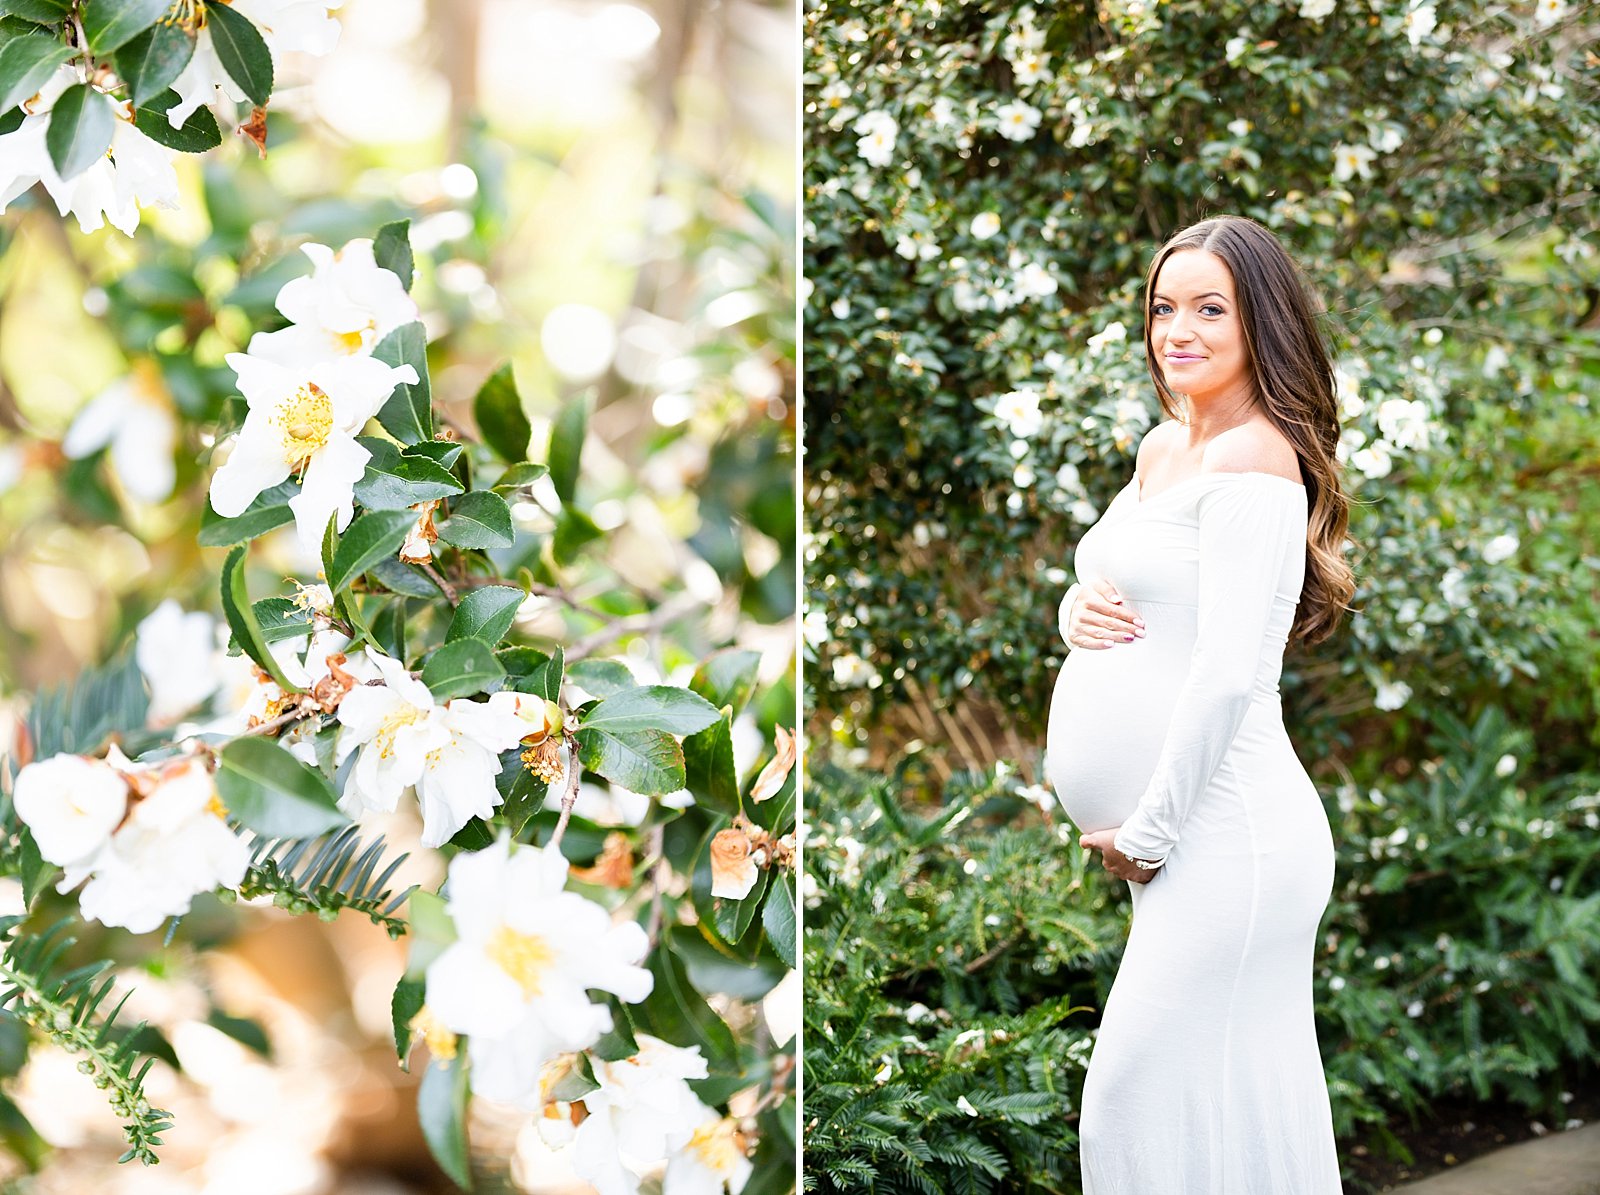 Dallas Maternity session with Randi Michelle Photography